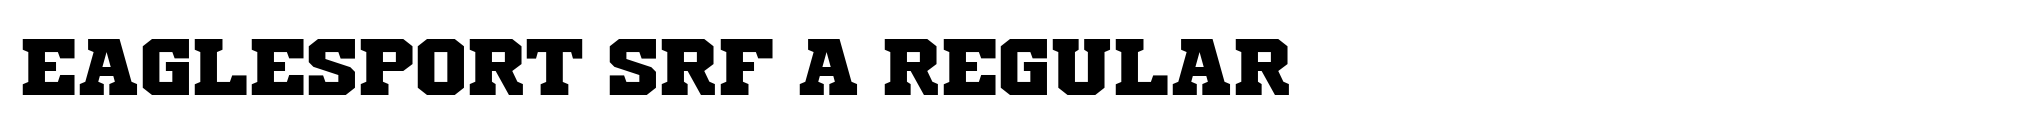 Eaglesport Srf A Regular image